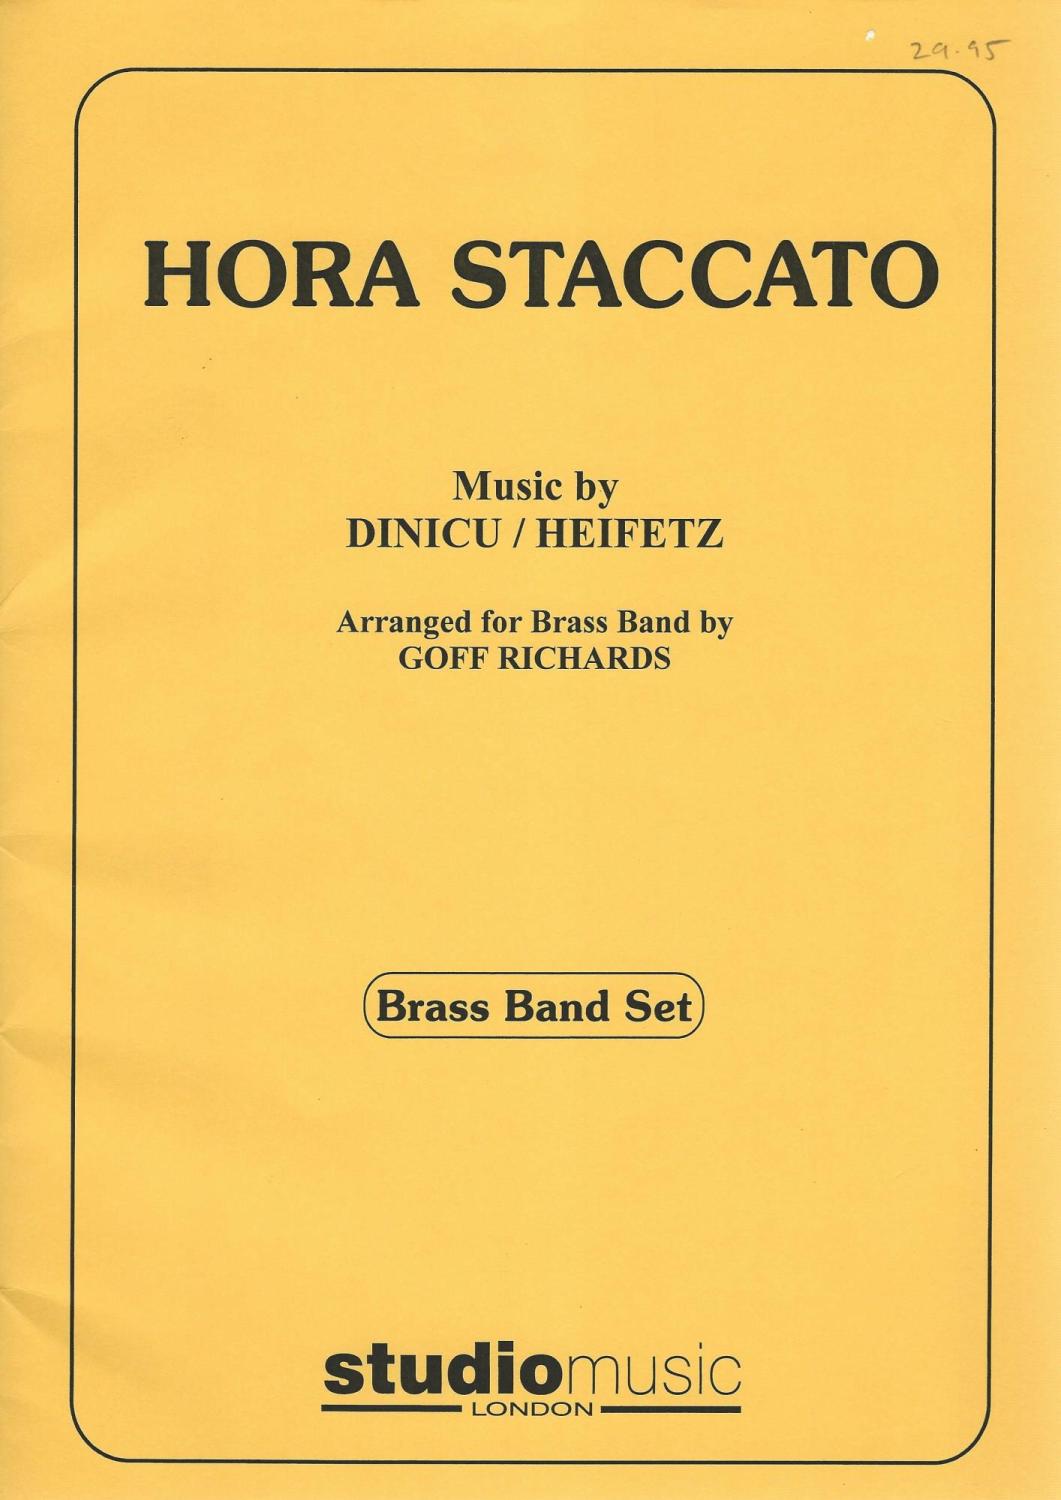 Hora Staccato for Brass Band - Dinicu/Heifetz arr. Goff Richards